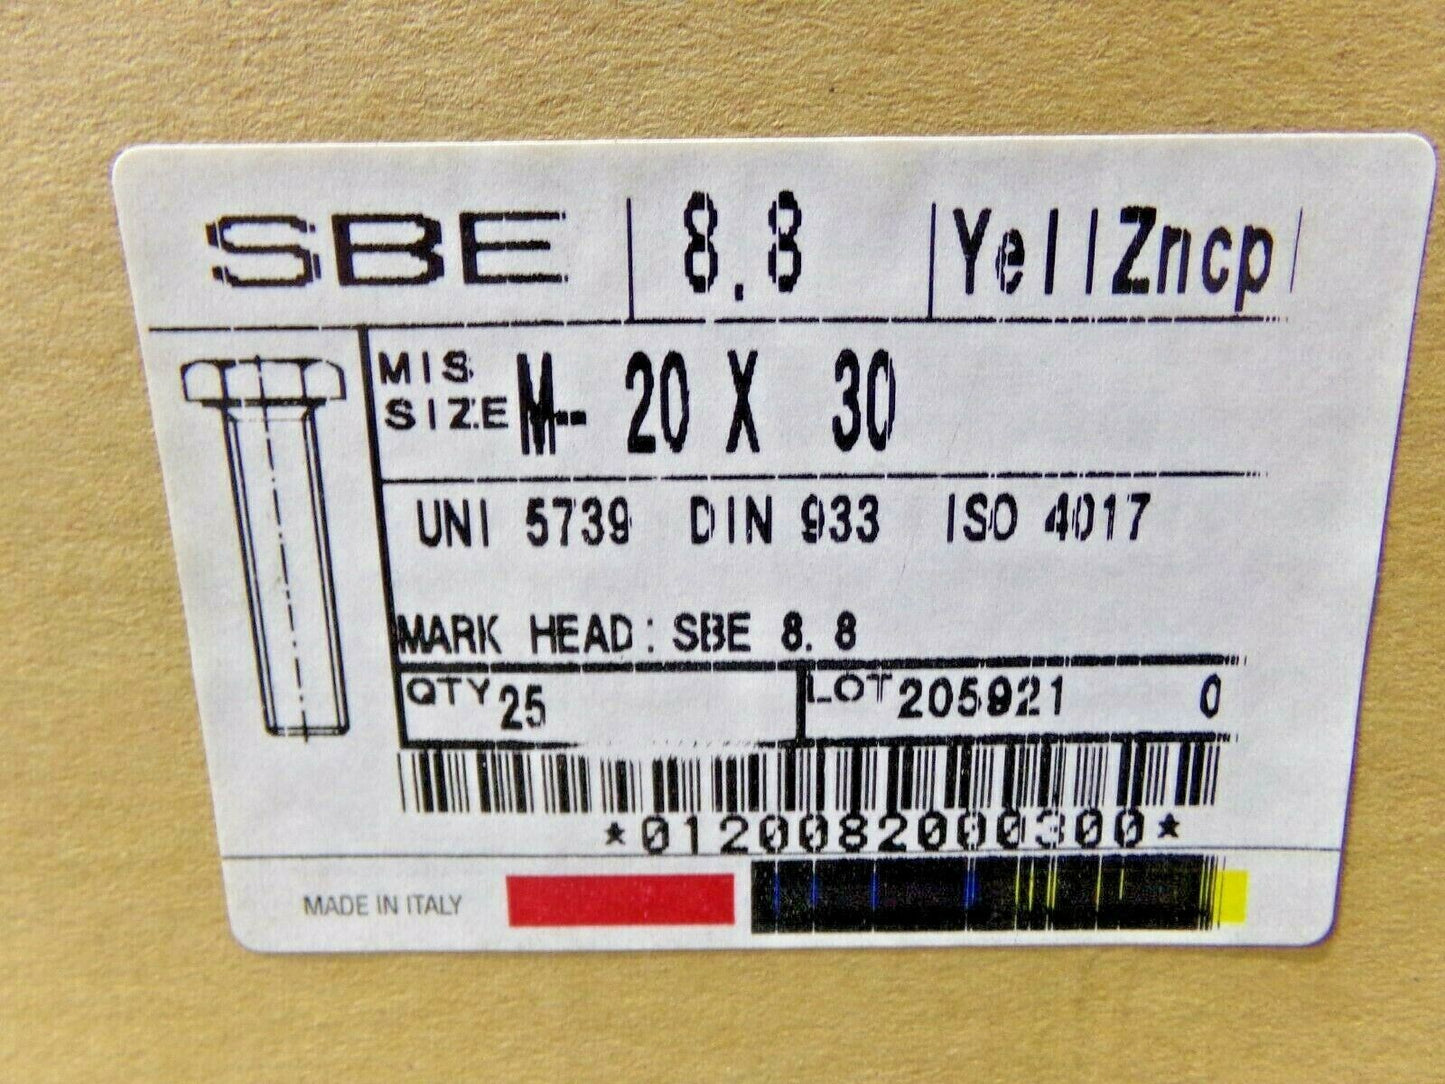 25 SBE 8.8 M20 X 30 UNI 5739 DIN 933 ISO 4017 YELLOW ZINC COATED STEEL BOLTS (183779490470-NBT04)